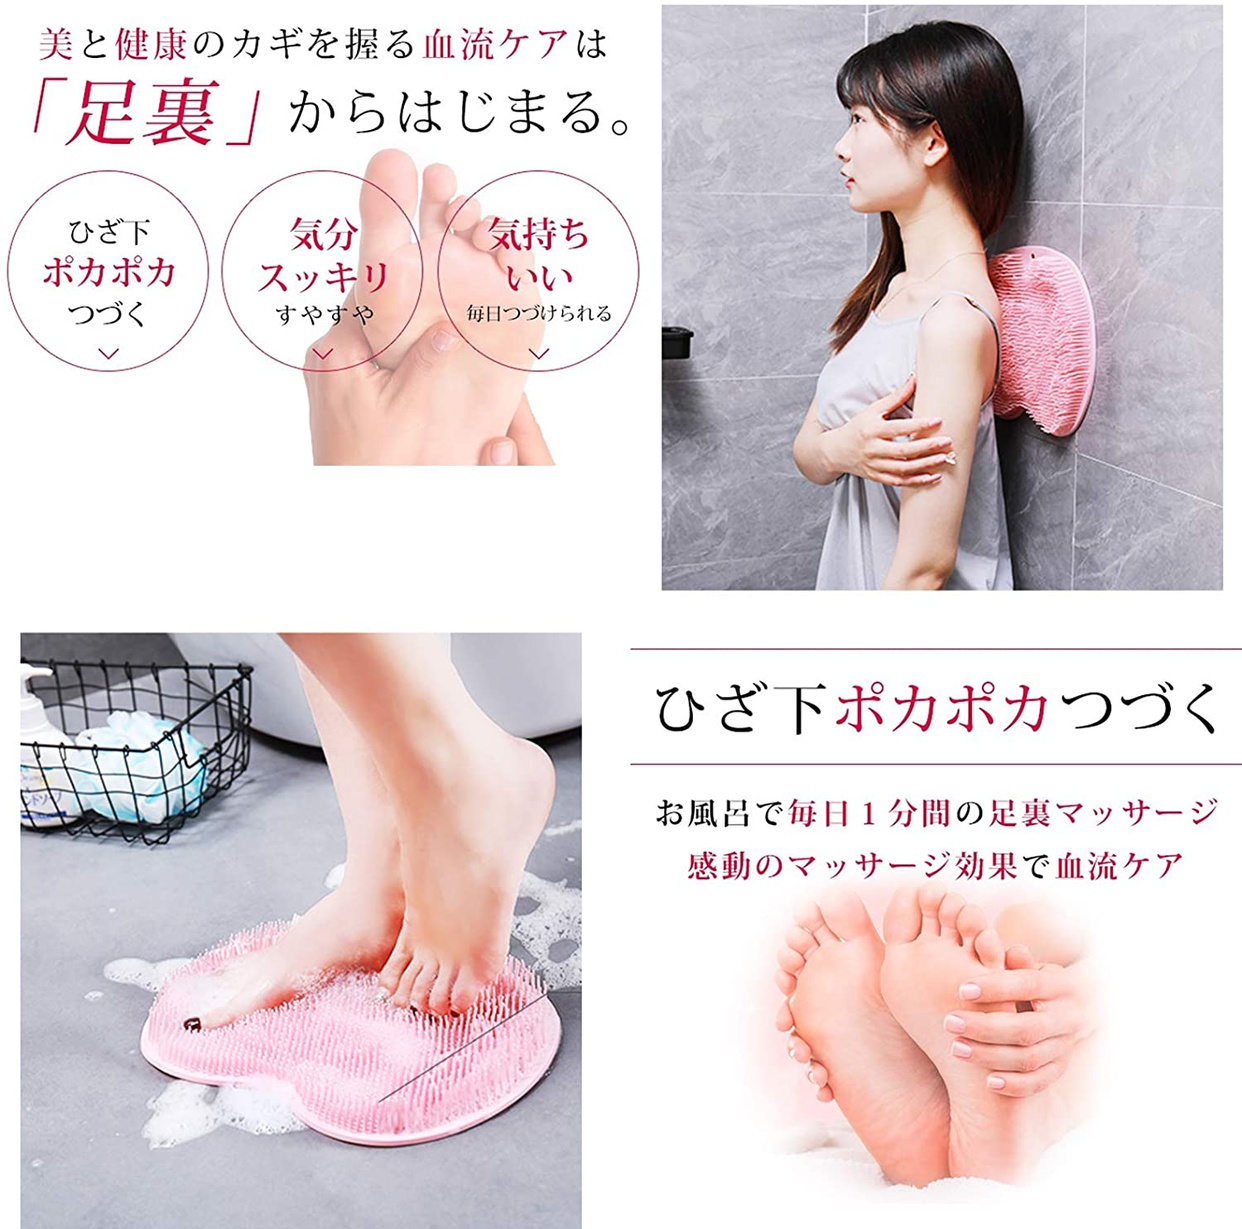 TOYU FREE(トーユーフリー) 足洗いマットの商品画像サムネ8 